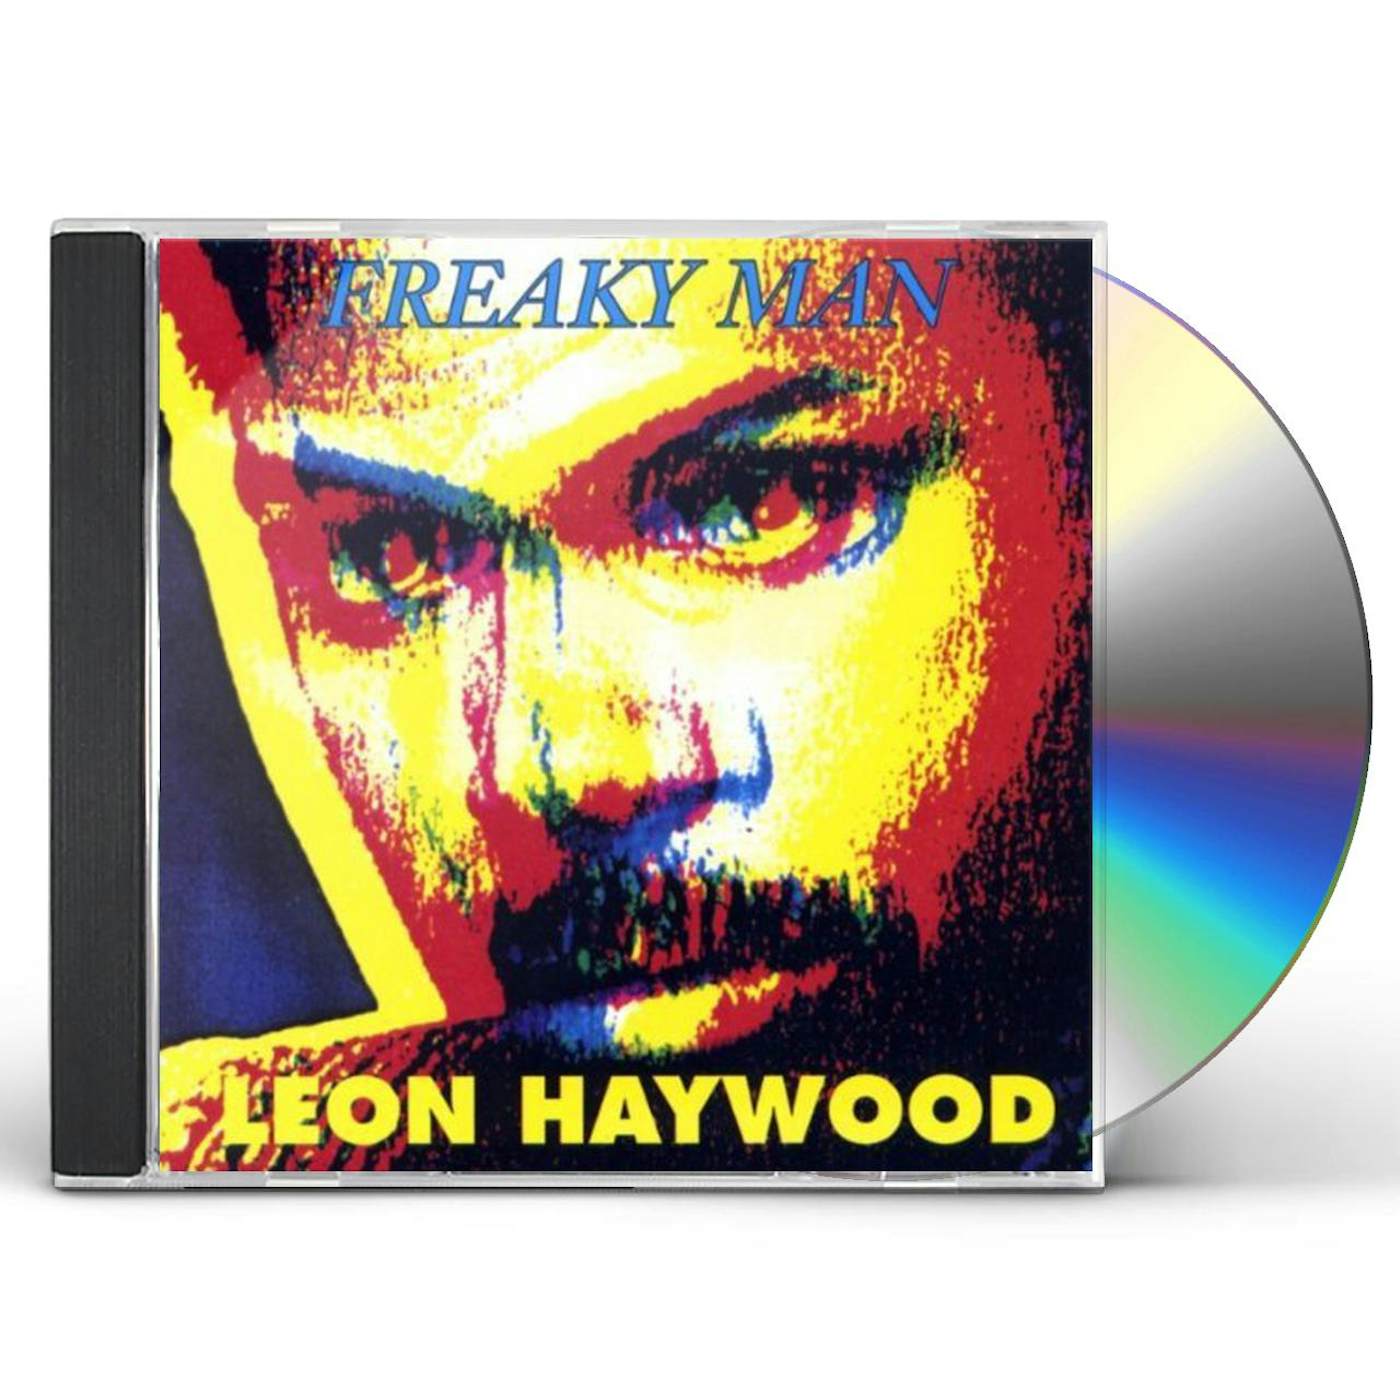 Leon Haywood FREAKY MAN CD